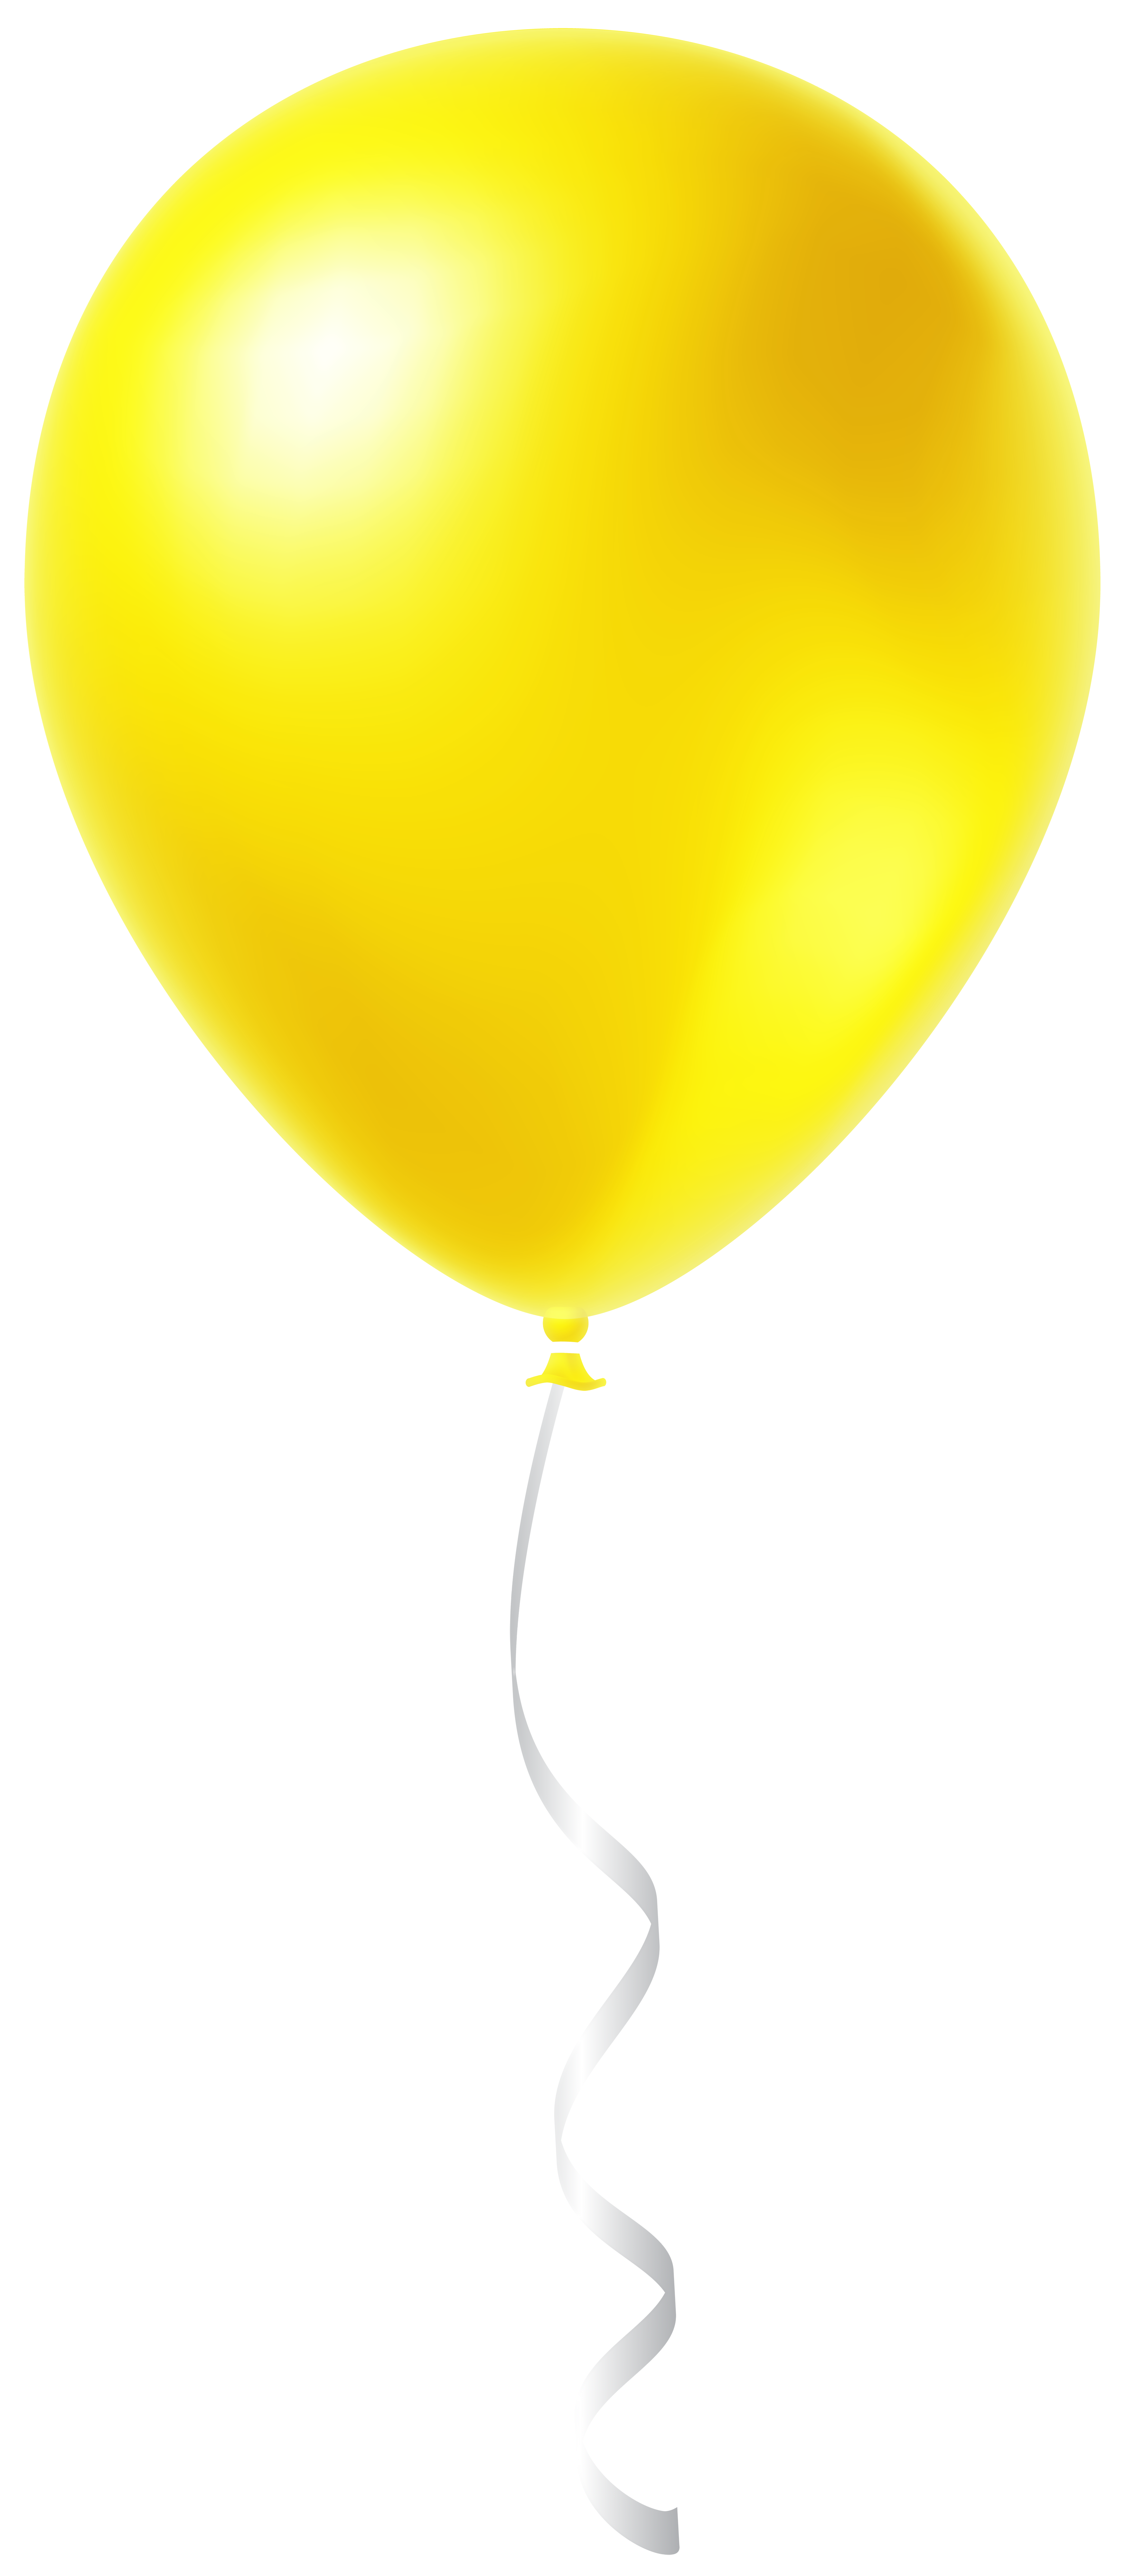 one yellow balloon